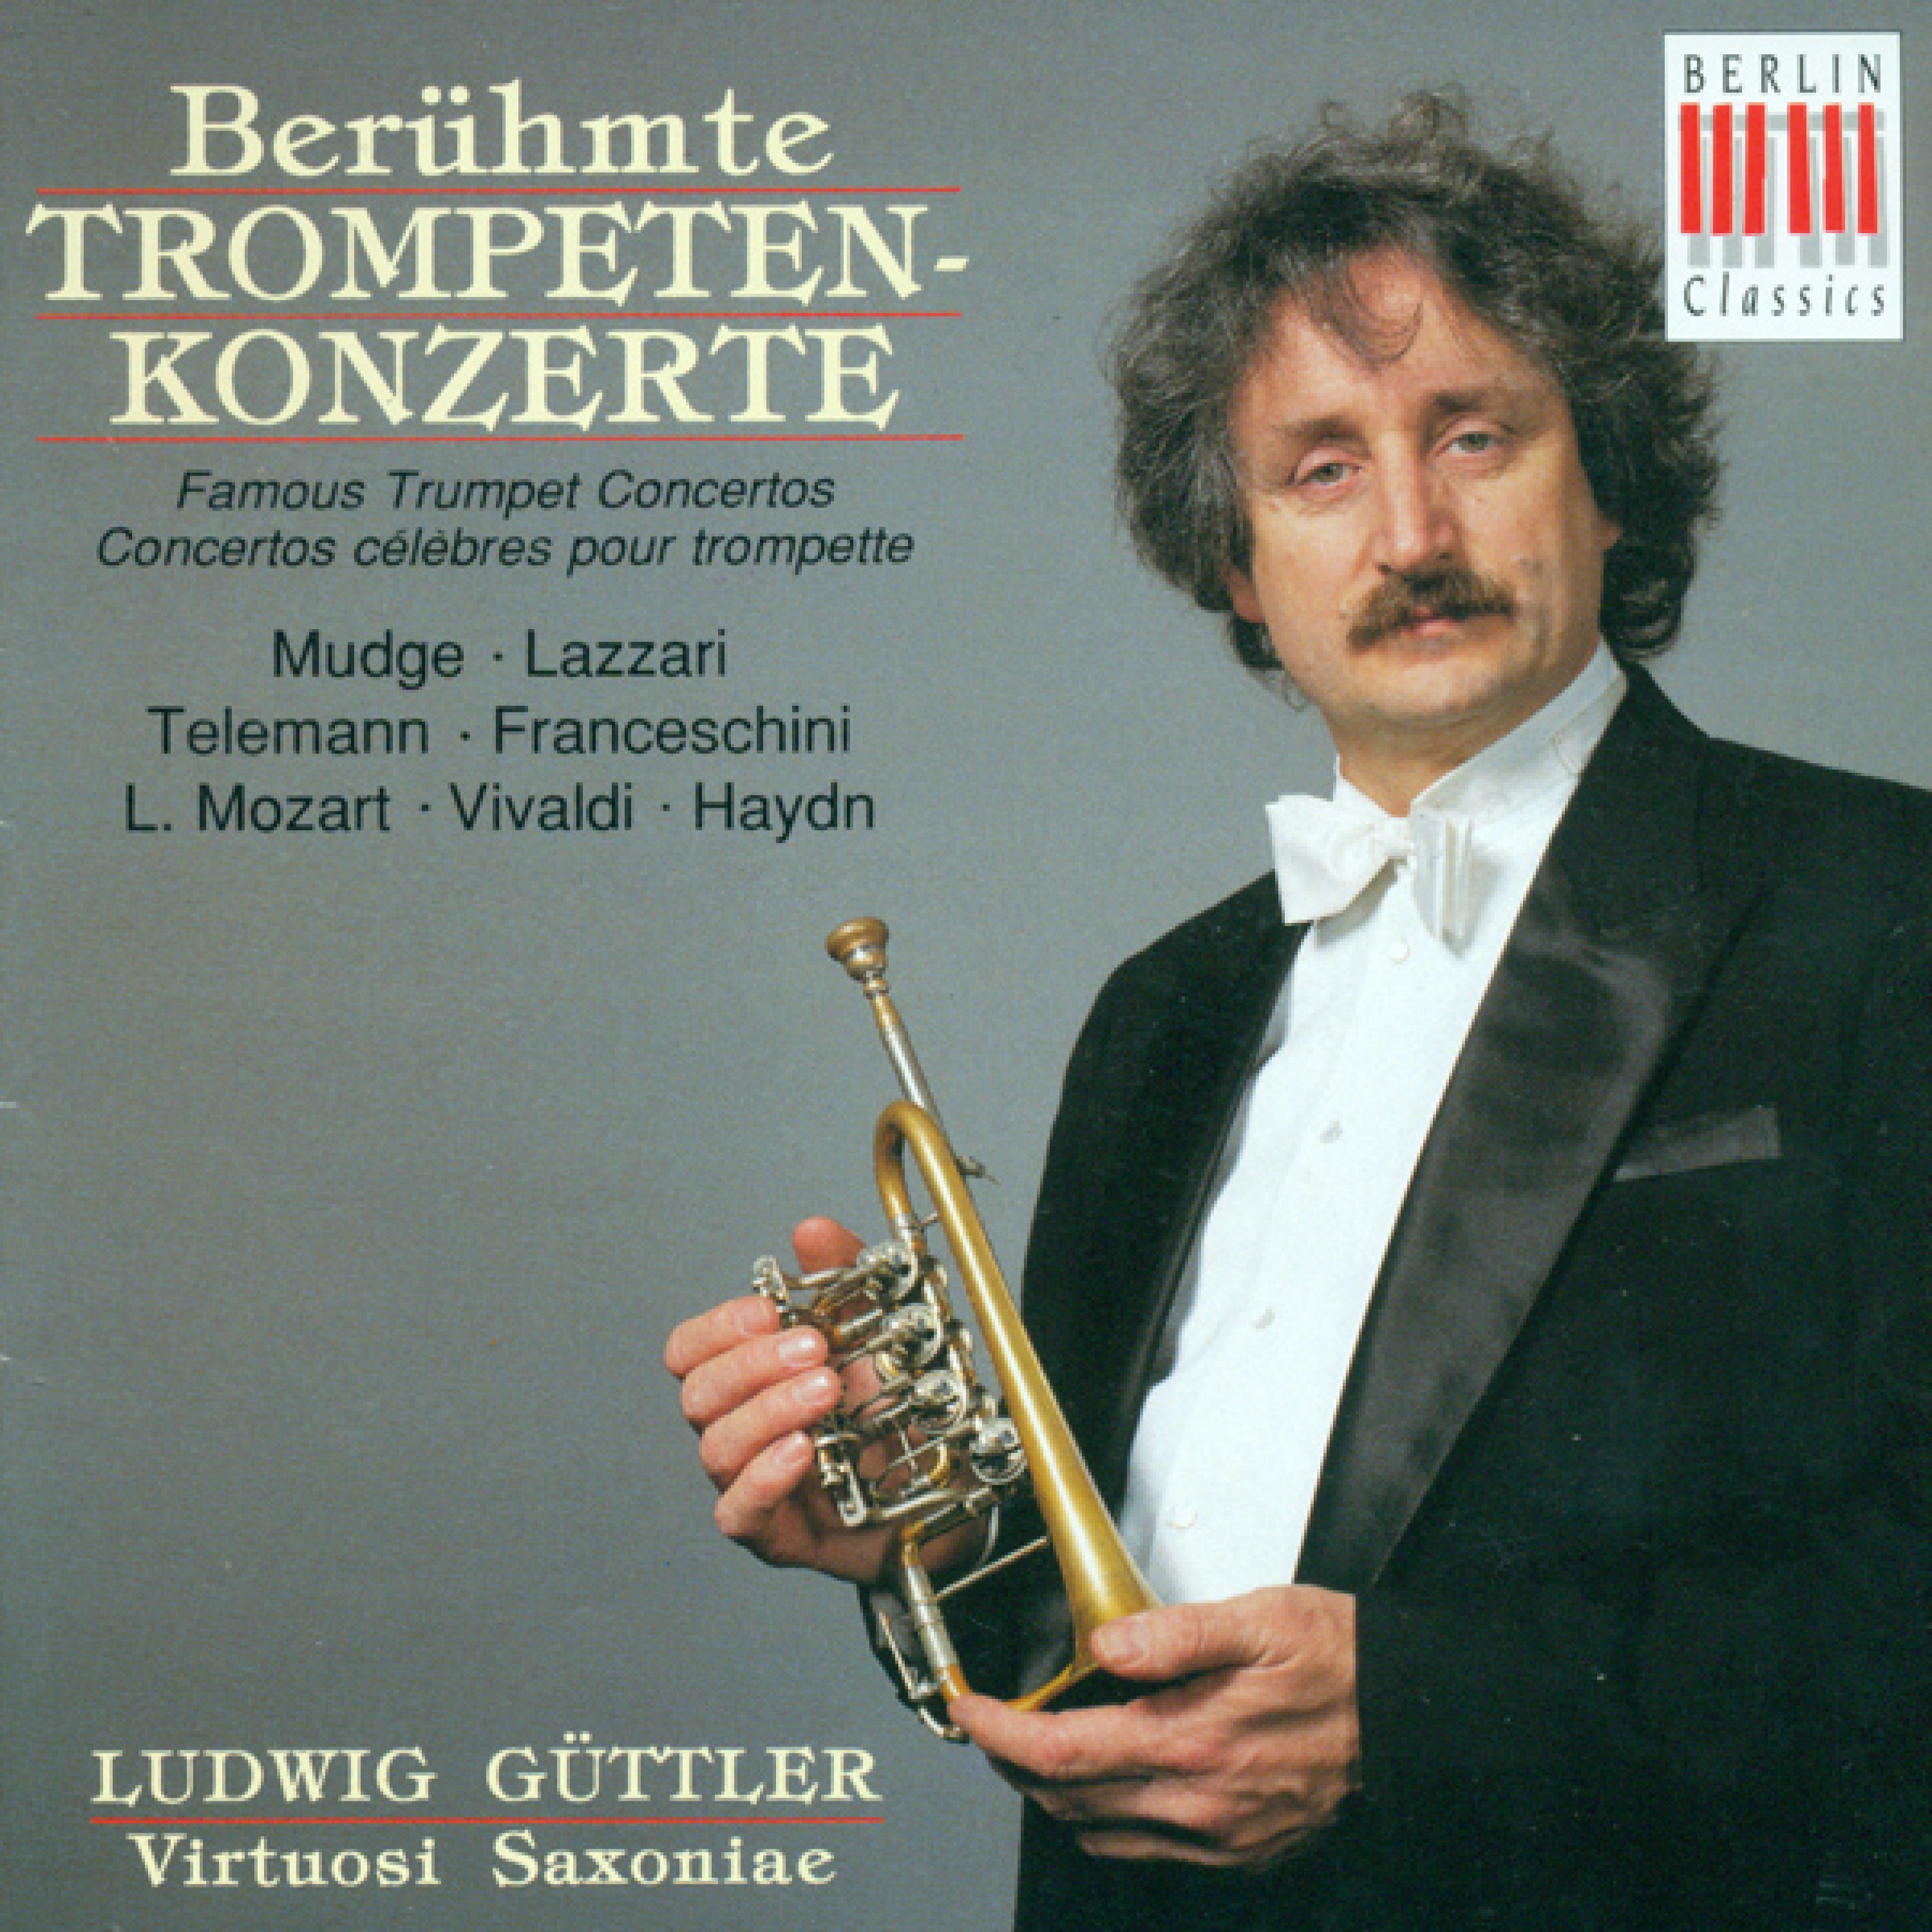 Mudge, Lazzari, Telemann, Franceschini, Mozart L., Vivaldi & Haydn: Famous Trumpet Concertos